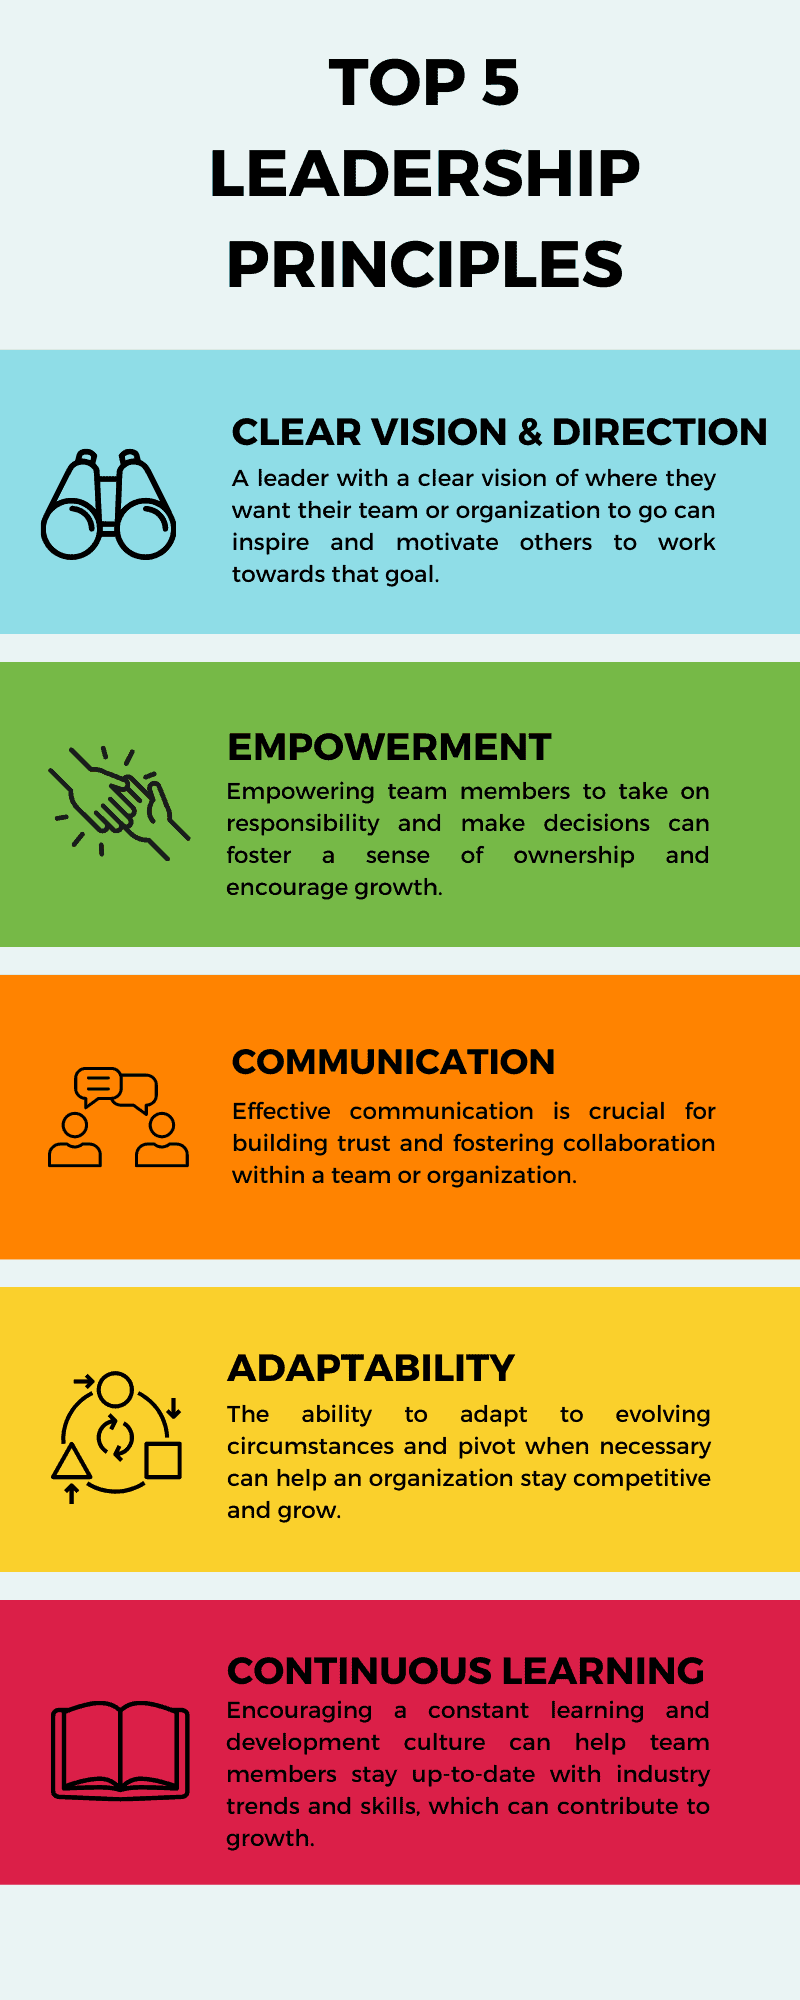 Top 5 Leadership Principles that Lead to Team Growth | Bricks Team Building